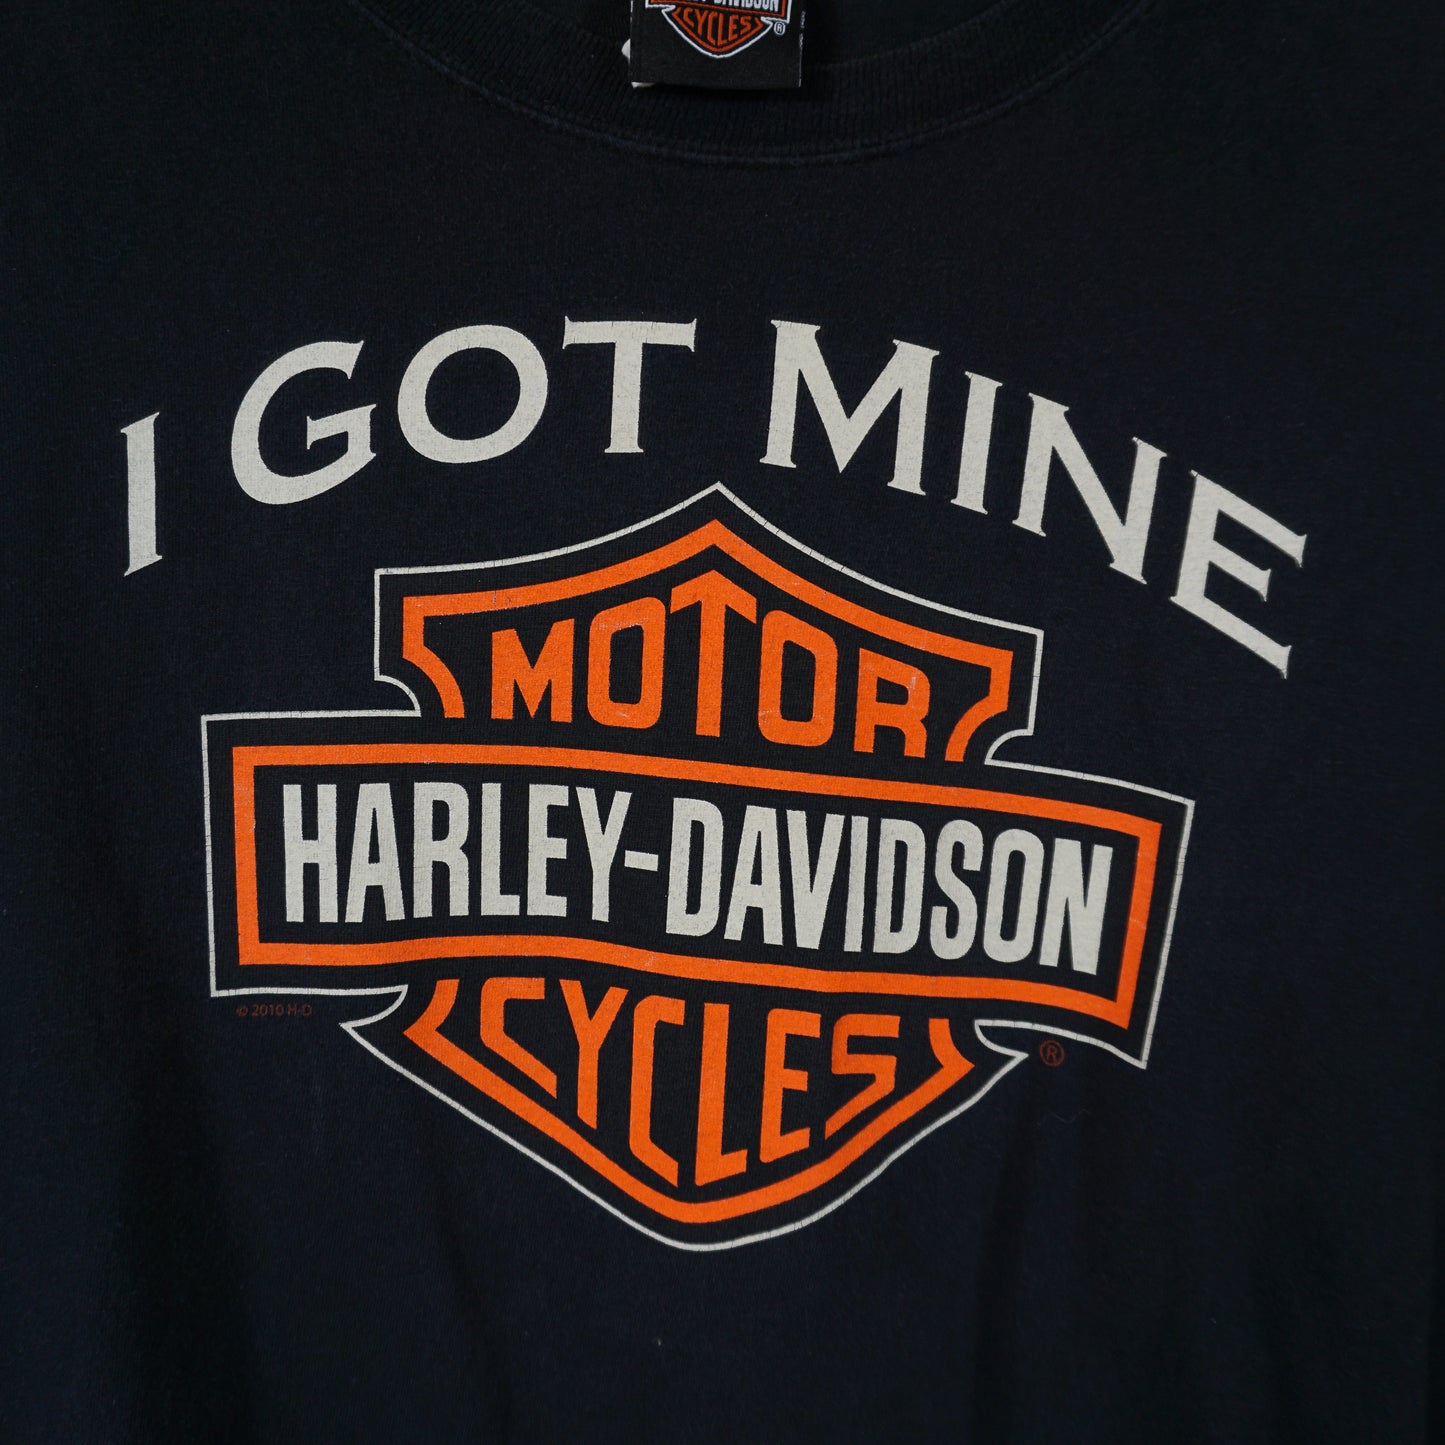 T-shirt Harley Davidson « I Got Mine » 2010 (XXL)